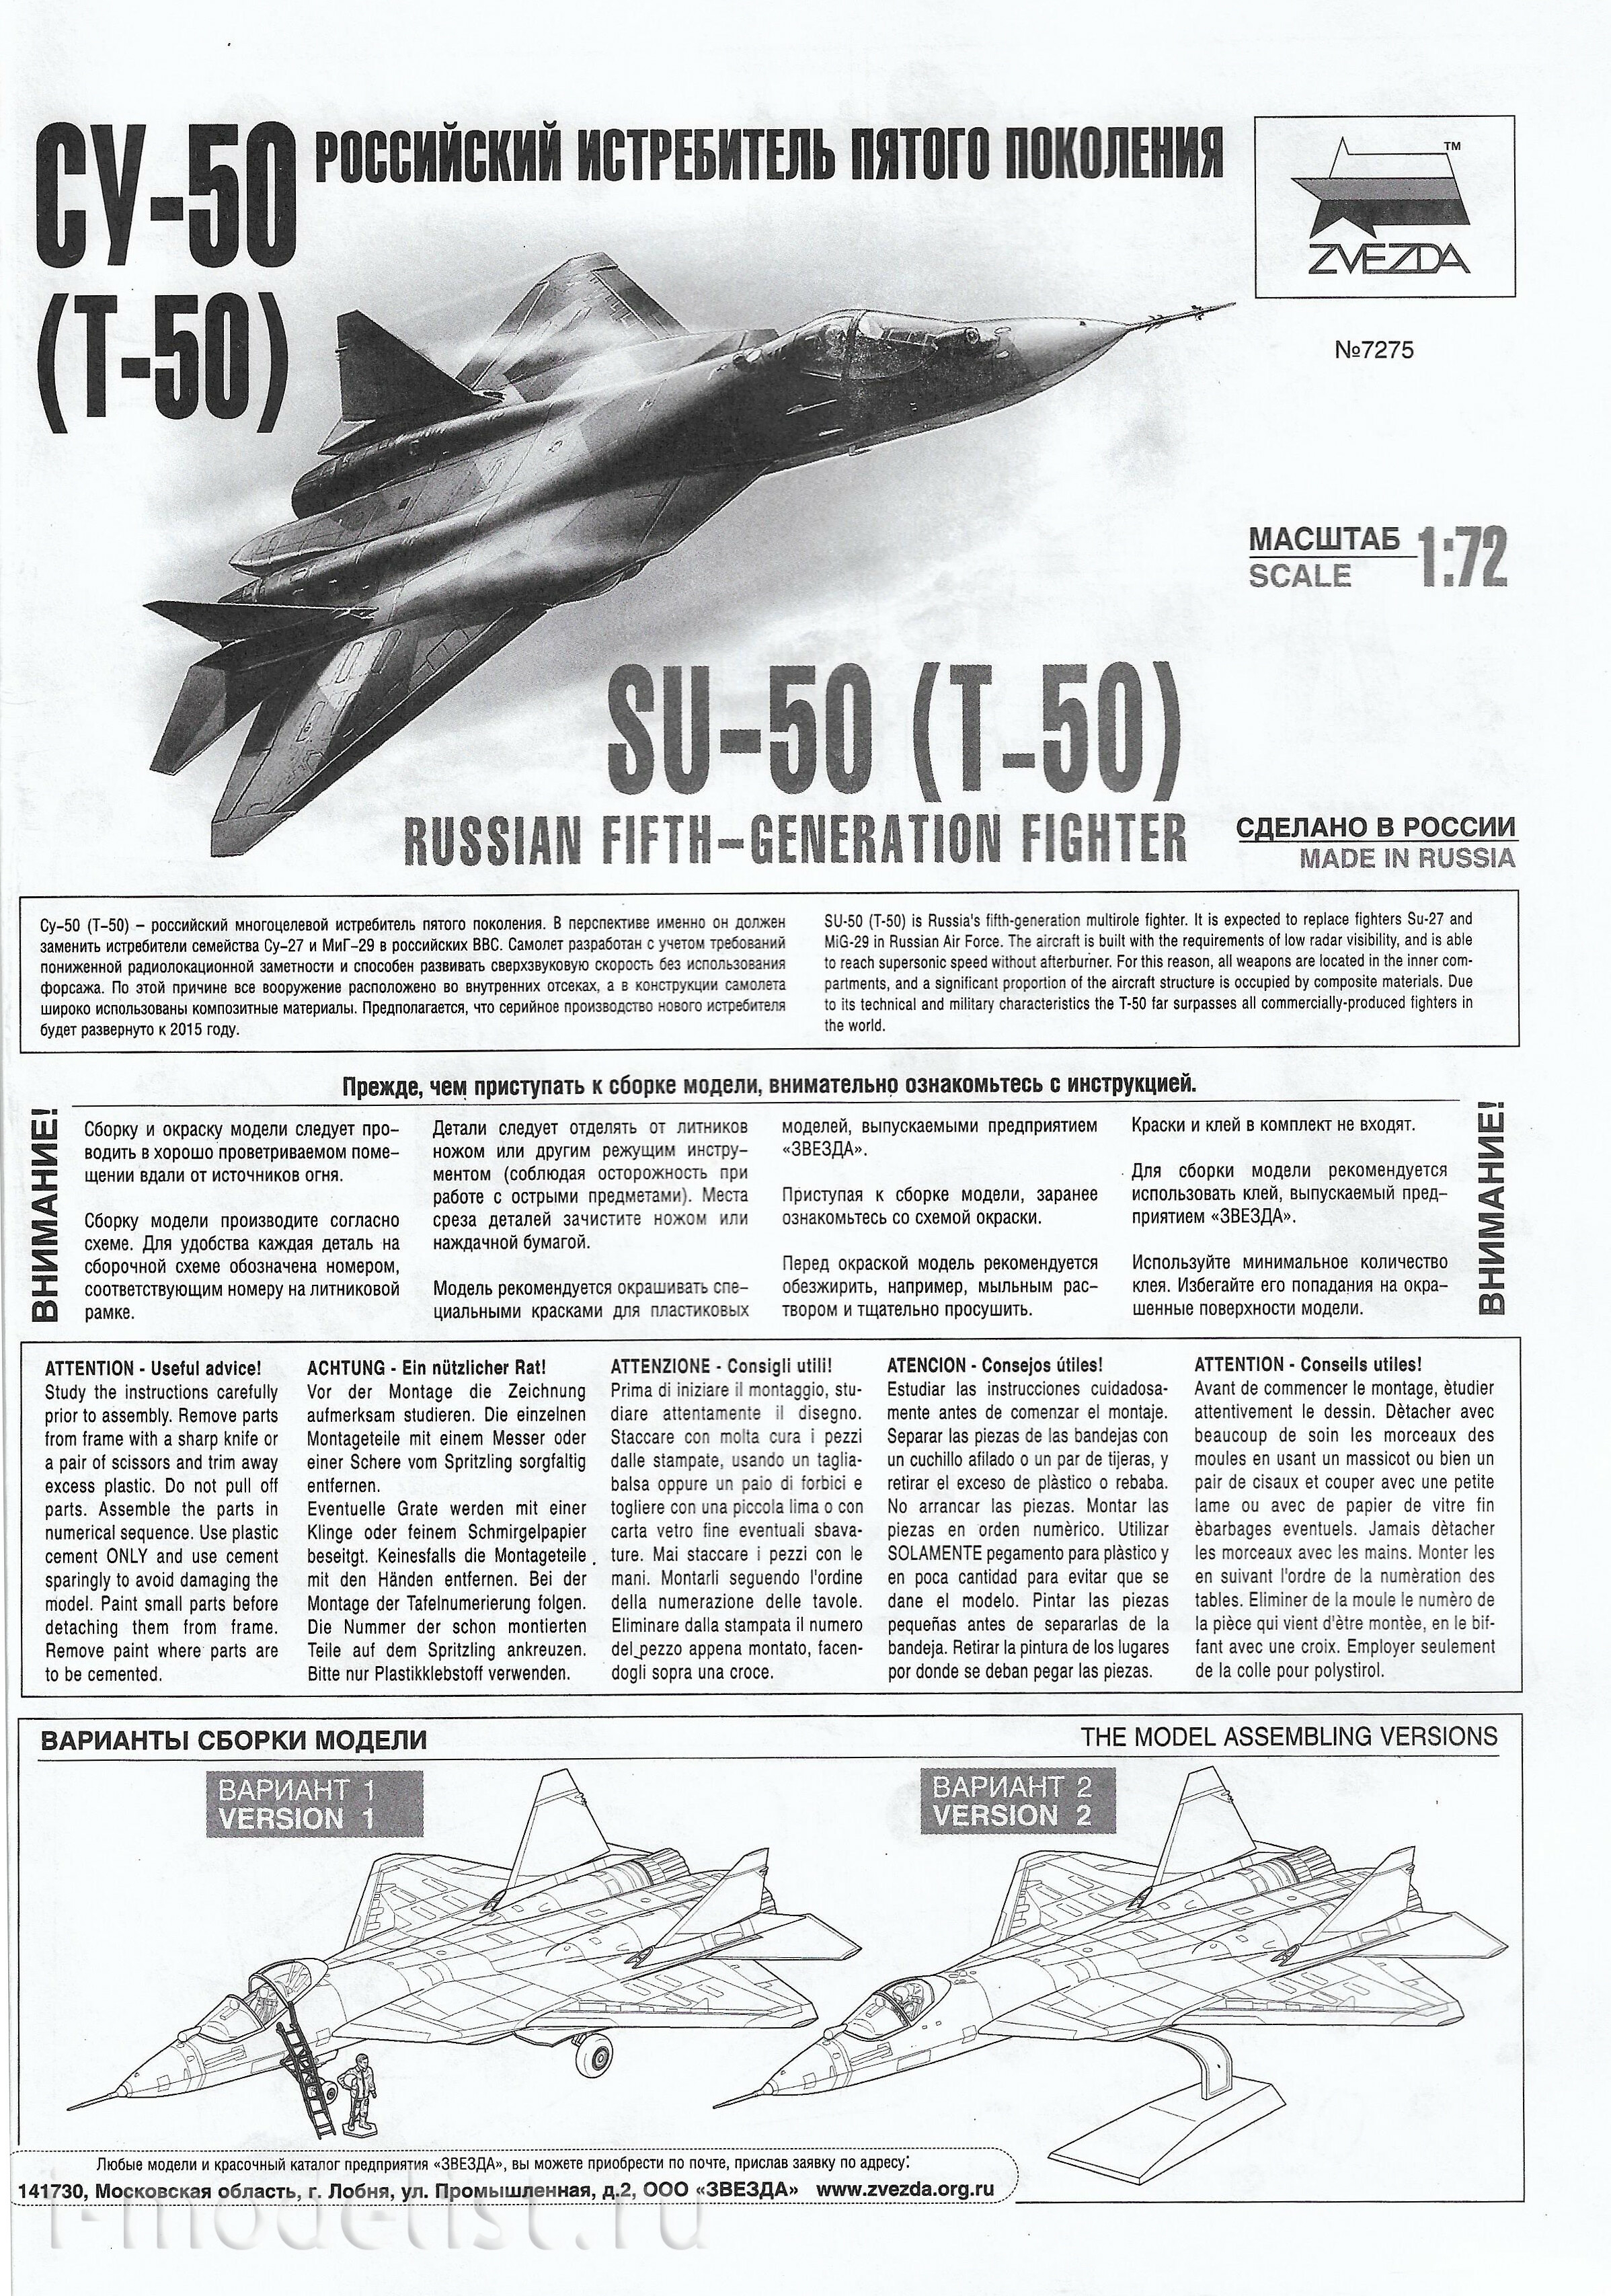 7275 Звезда 1/72 Самолёт Су-50 (Су-57 опытный образец самолёта)